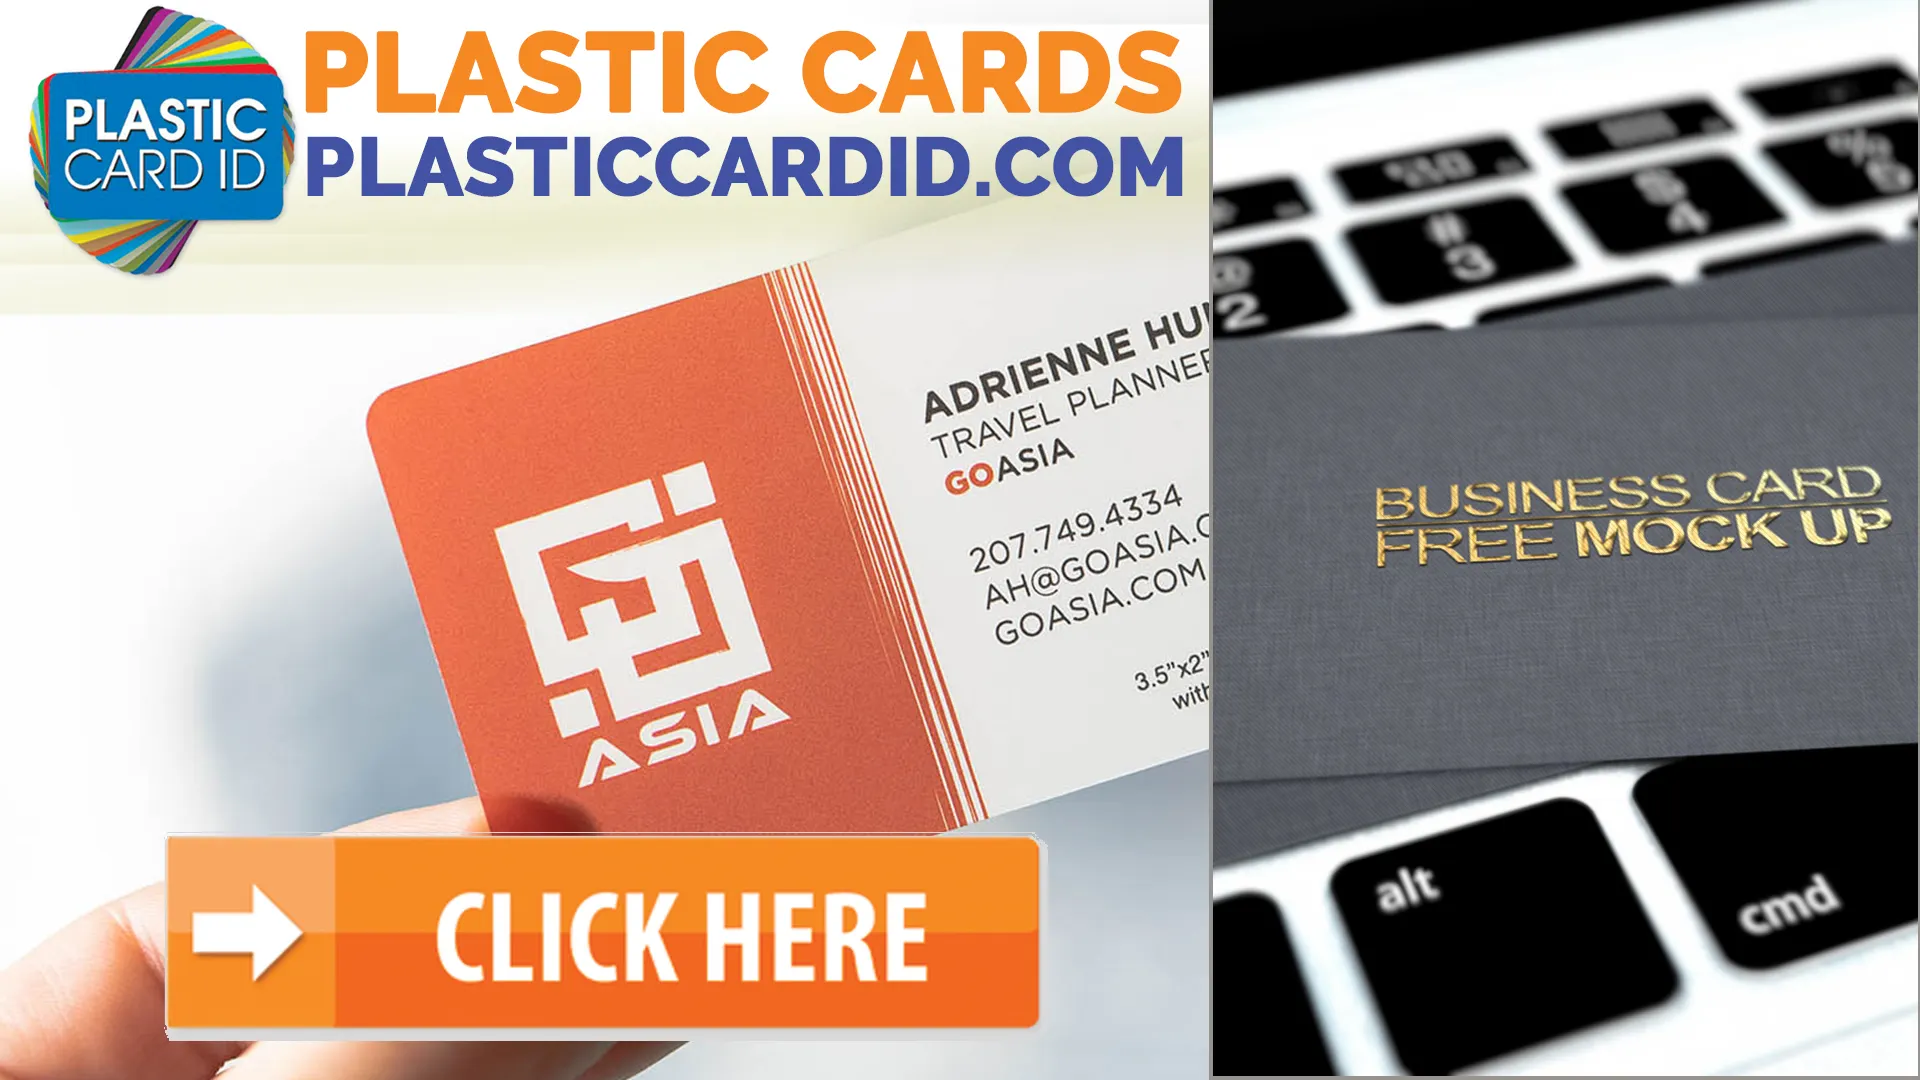 Plastic Card ID
: Where Creativity and Brand Identity Merge